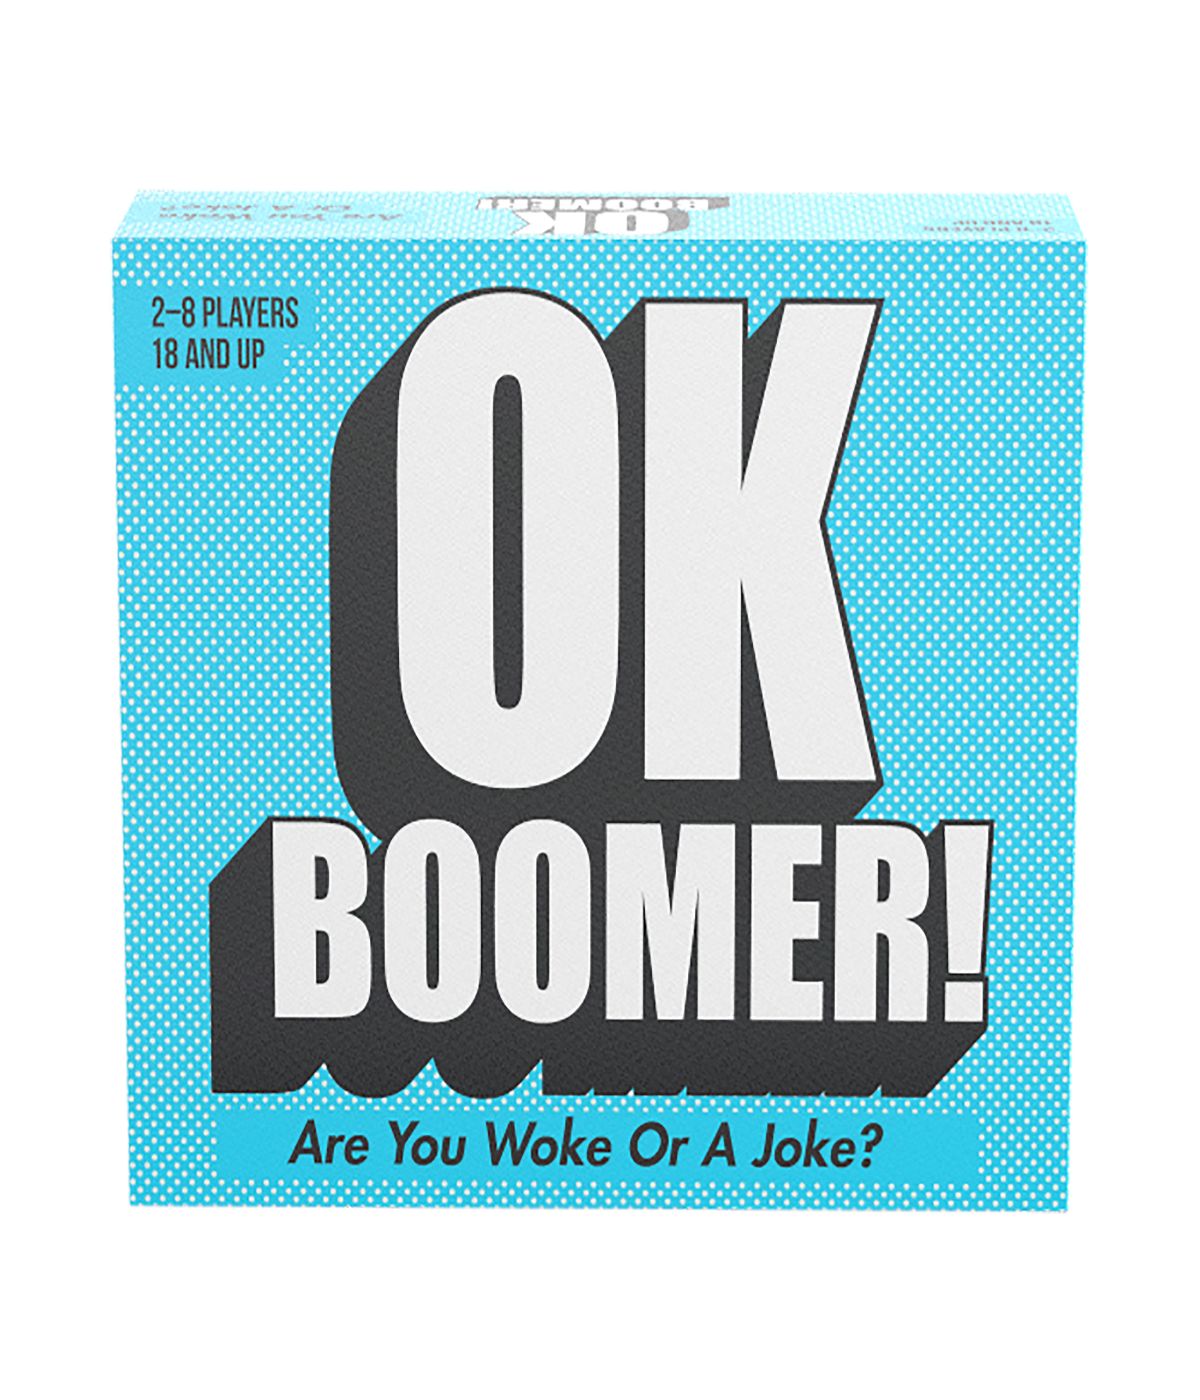 OK Boomer! Multi